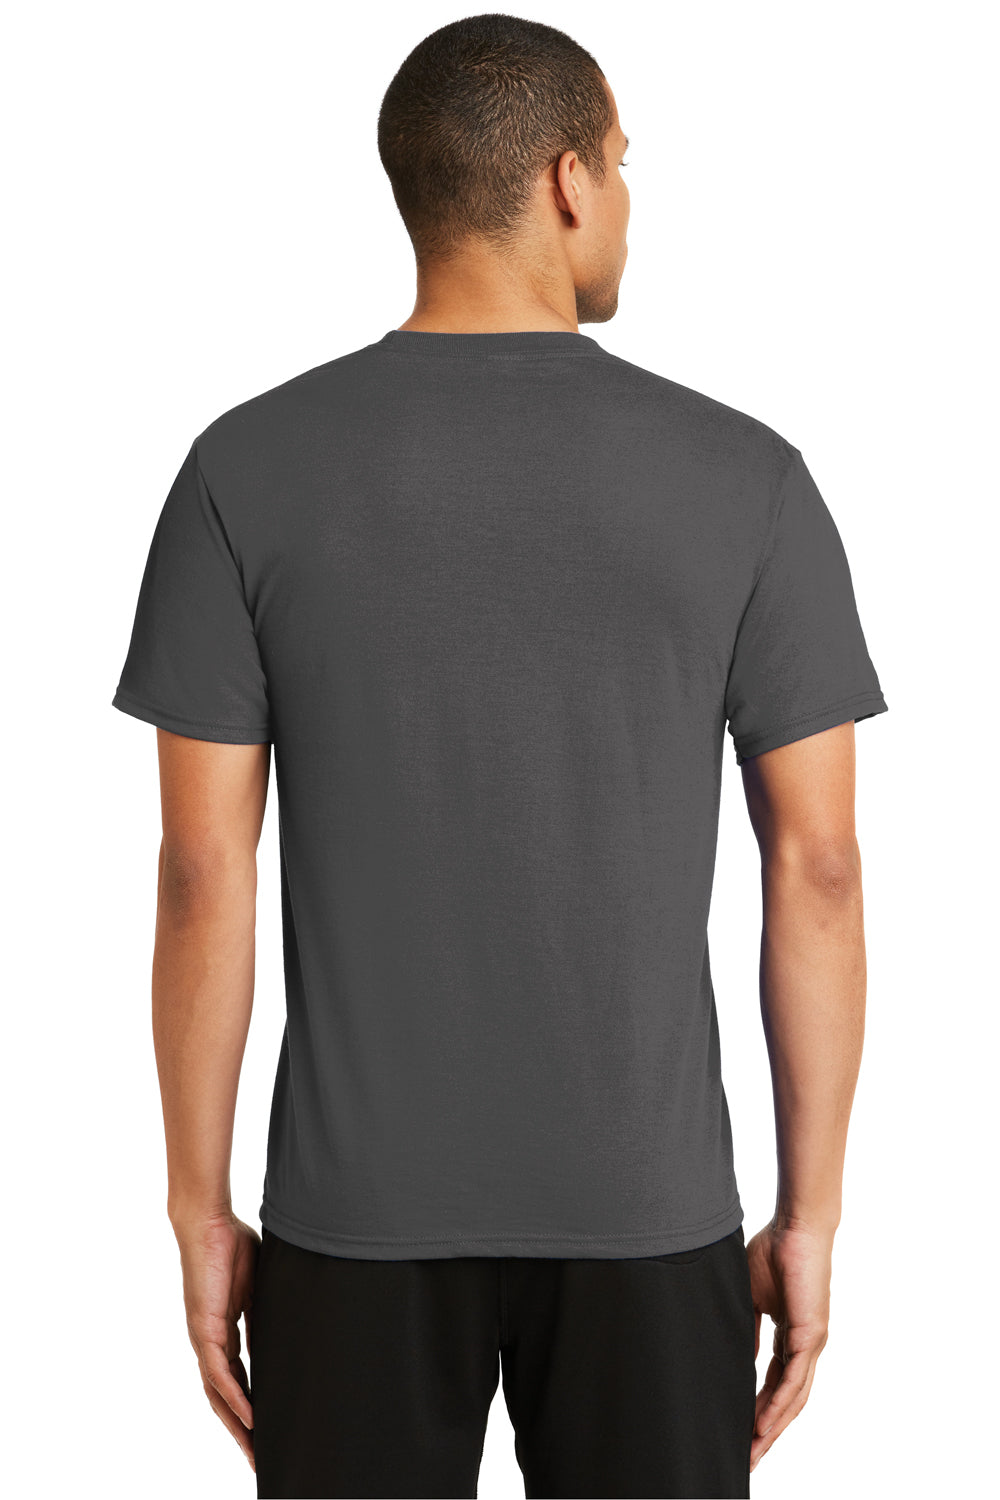 Port & Company PC381 Mens Dry Zone Performance Moisture Wicking Short Sleeve Crewneck T-Shirt Charcoal Grey Back